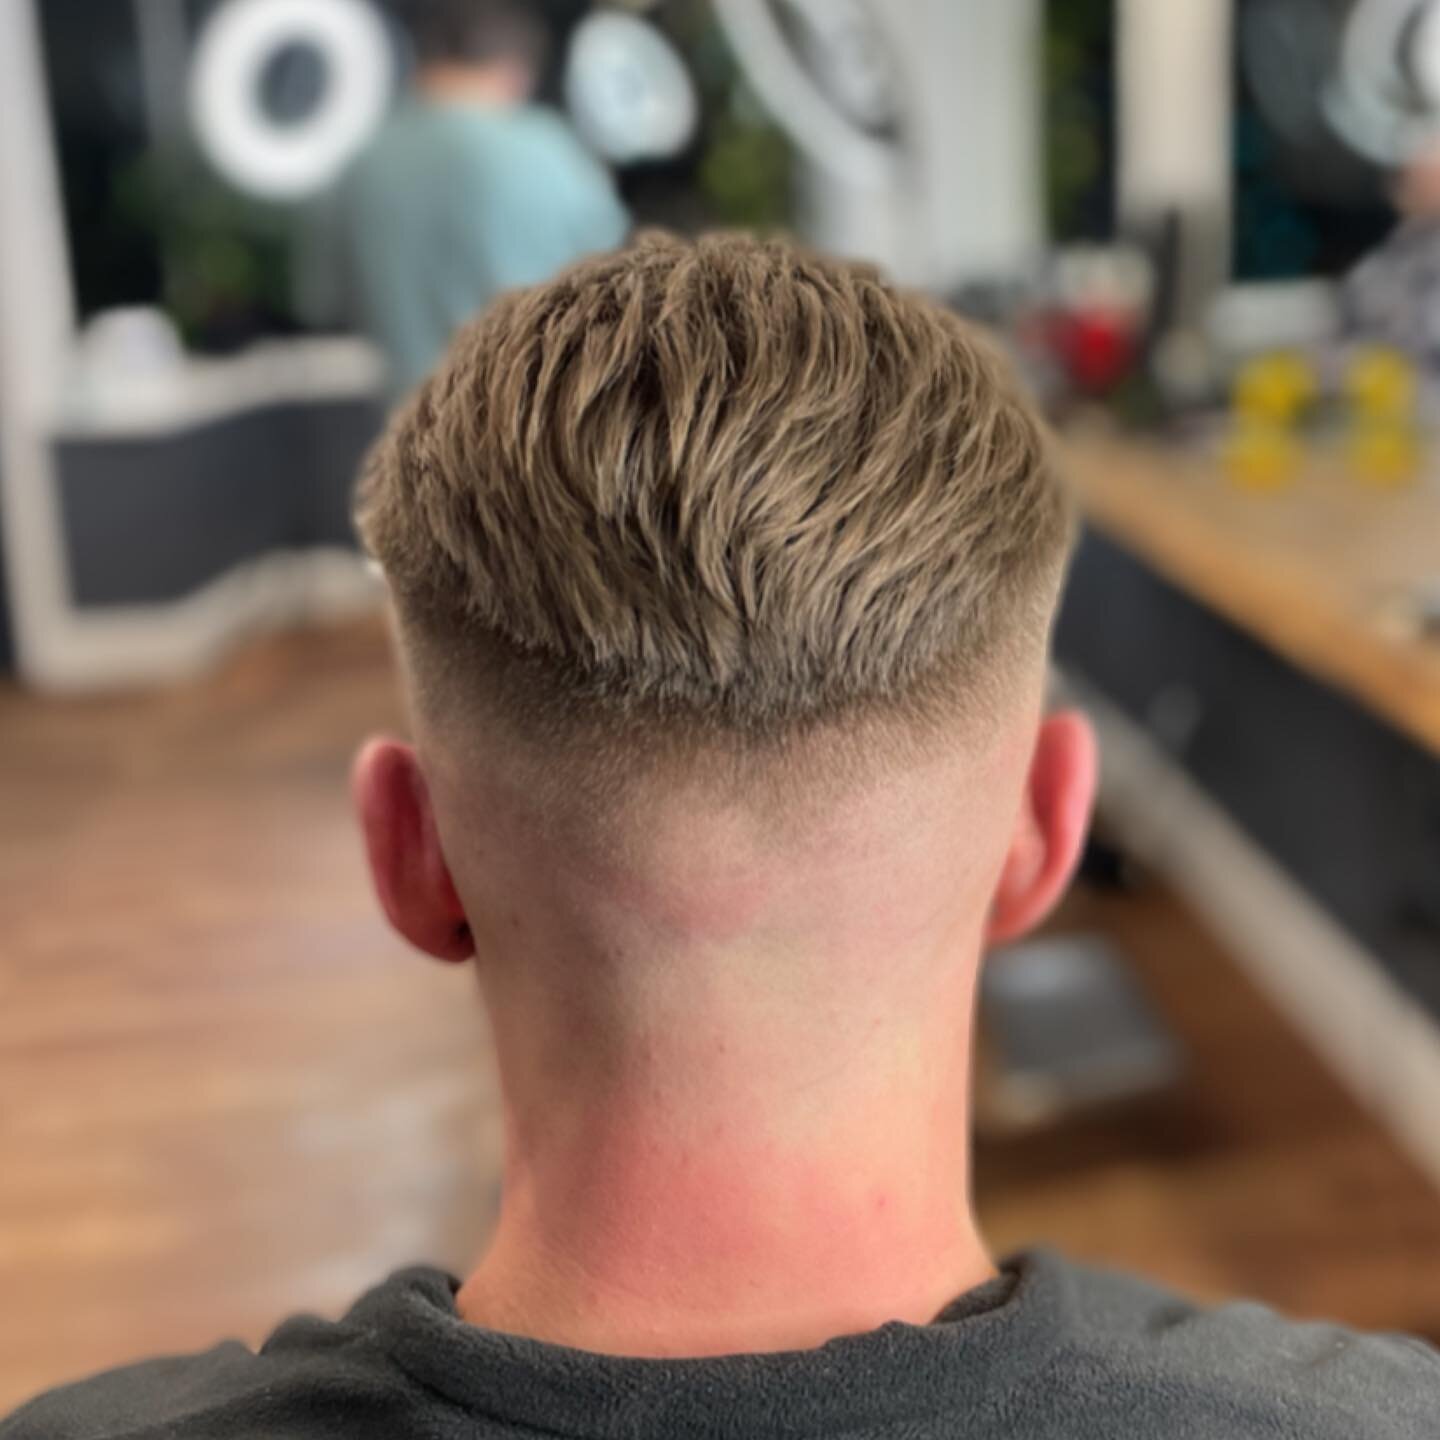 We&rsquo;ve got you covered from the back 🍃 
&bull;
&bull;
High skin fade and scissor cut top by @kierandaltonn ❄️
&bull;
&bull;
#barber #barbers #barbering #barbershop #barbershops #barbershopconnect #barbershopconnectuk #leeds #leedsbarber #ls6 #h